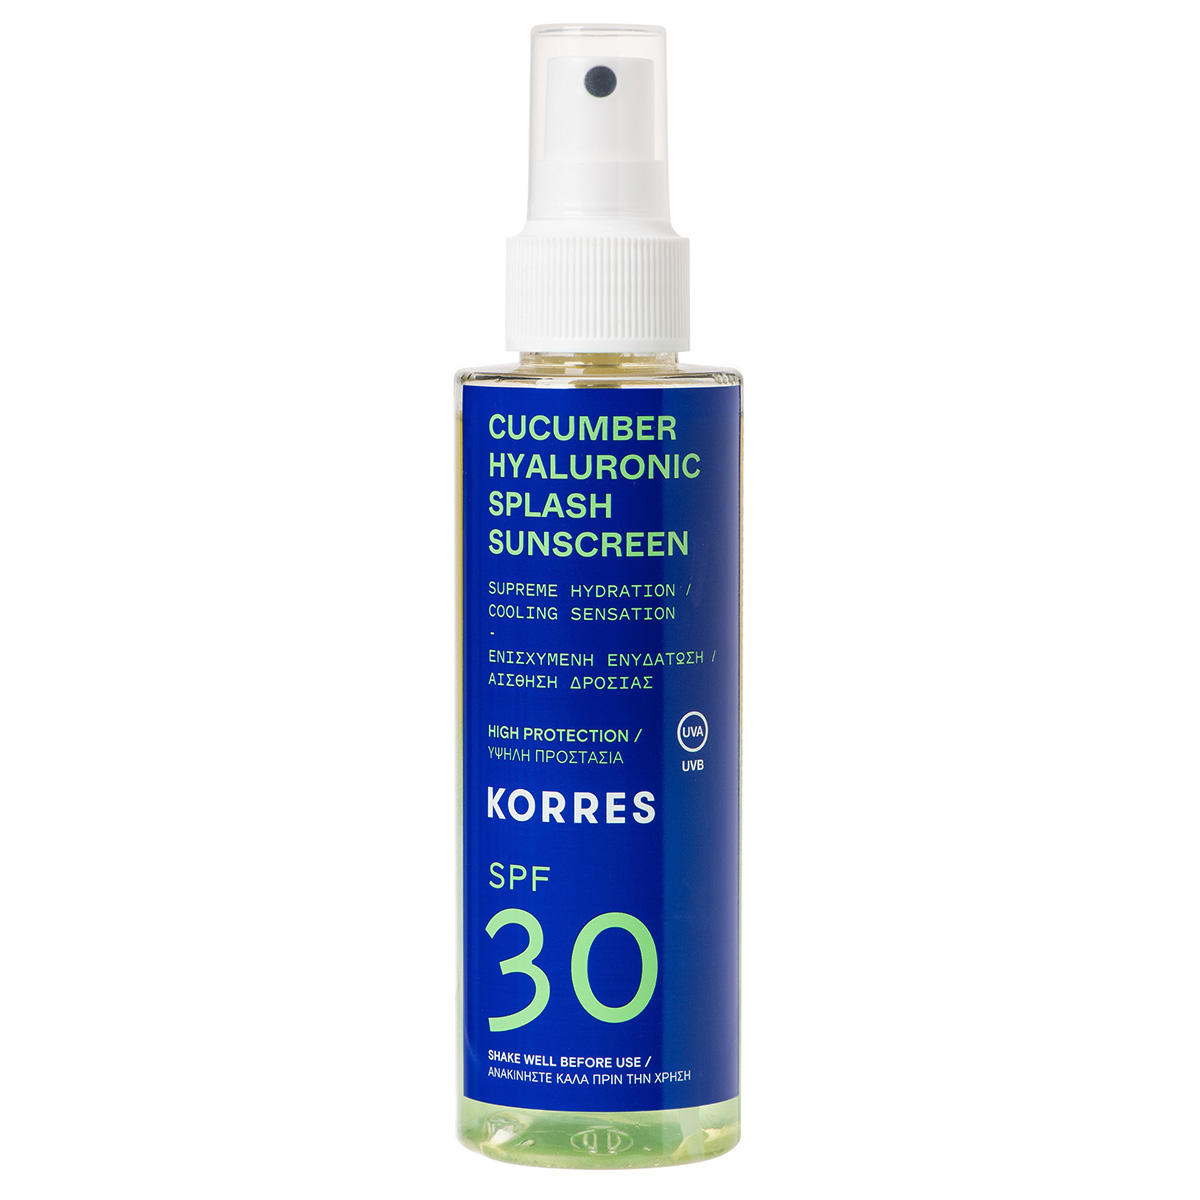 KORRES Cucumber Hyaluronic Splash 2 Phase Sunscreen Spray for Face and Body SPF 30 150 ml - 2